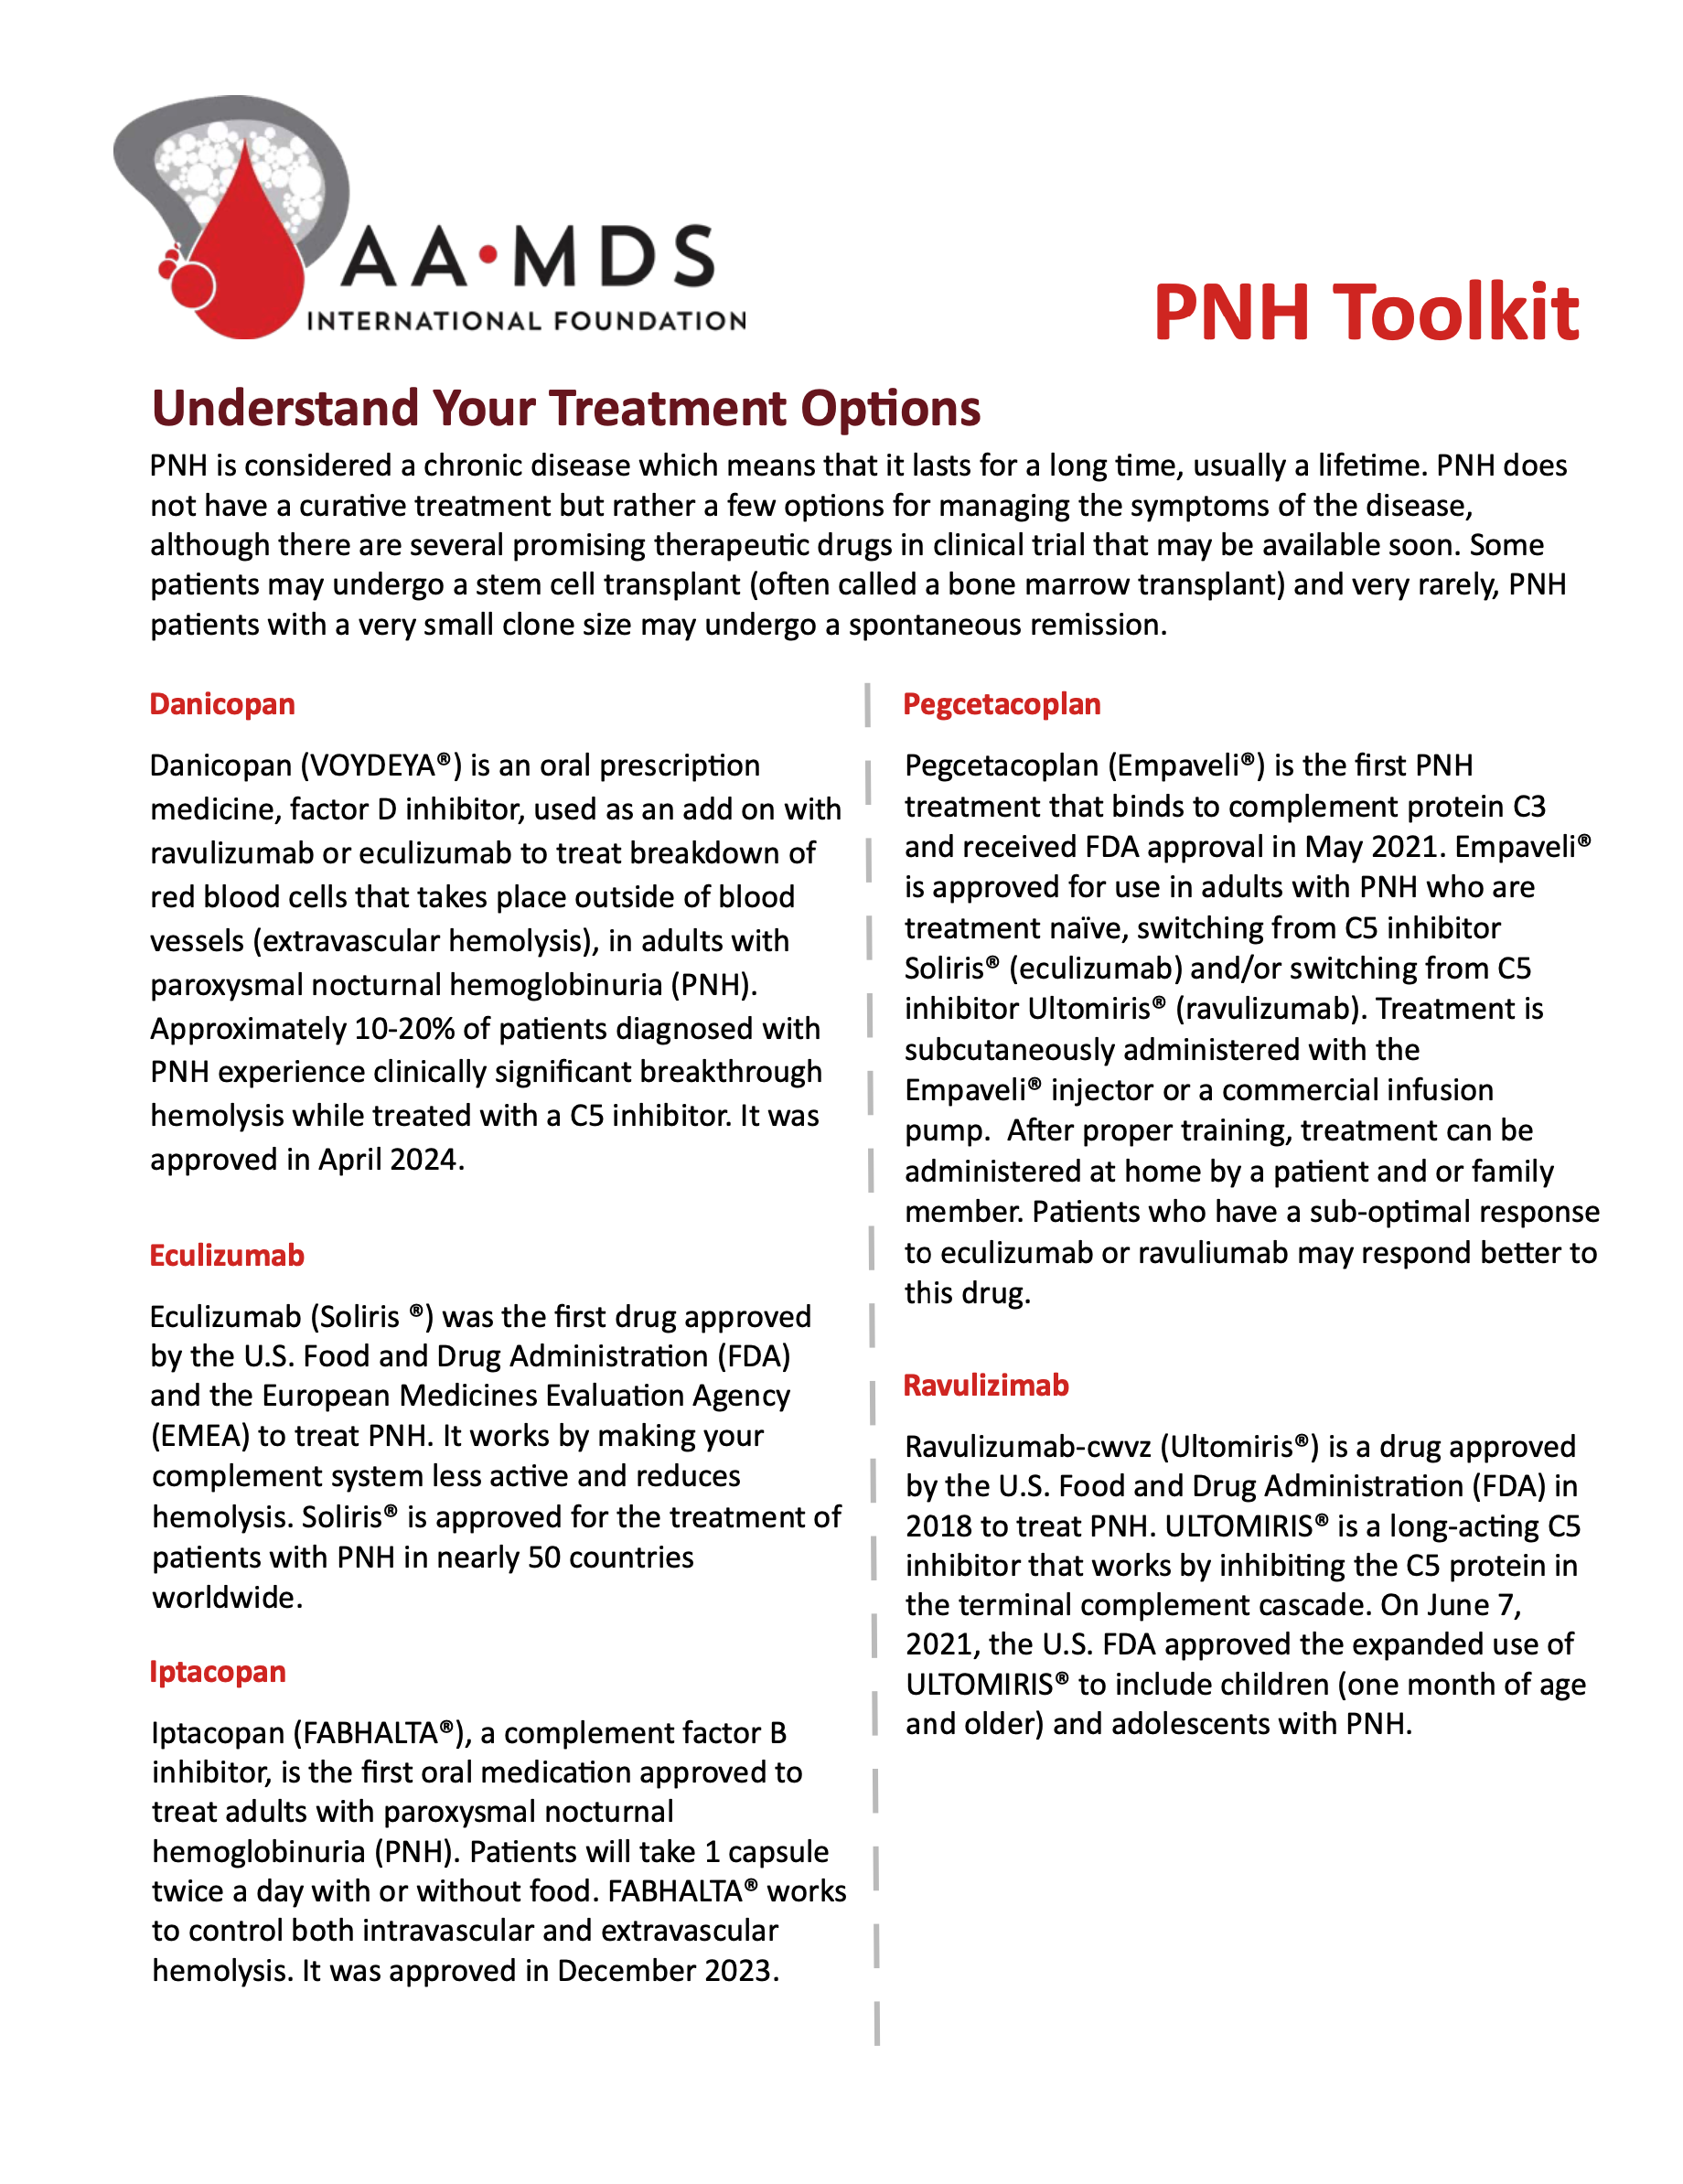 Aplastic Anemia Toolkit - Treatment Options for PNH (Thumbnail)